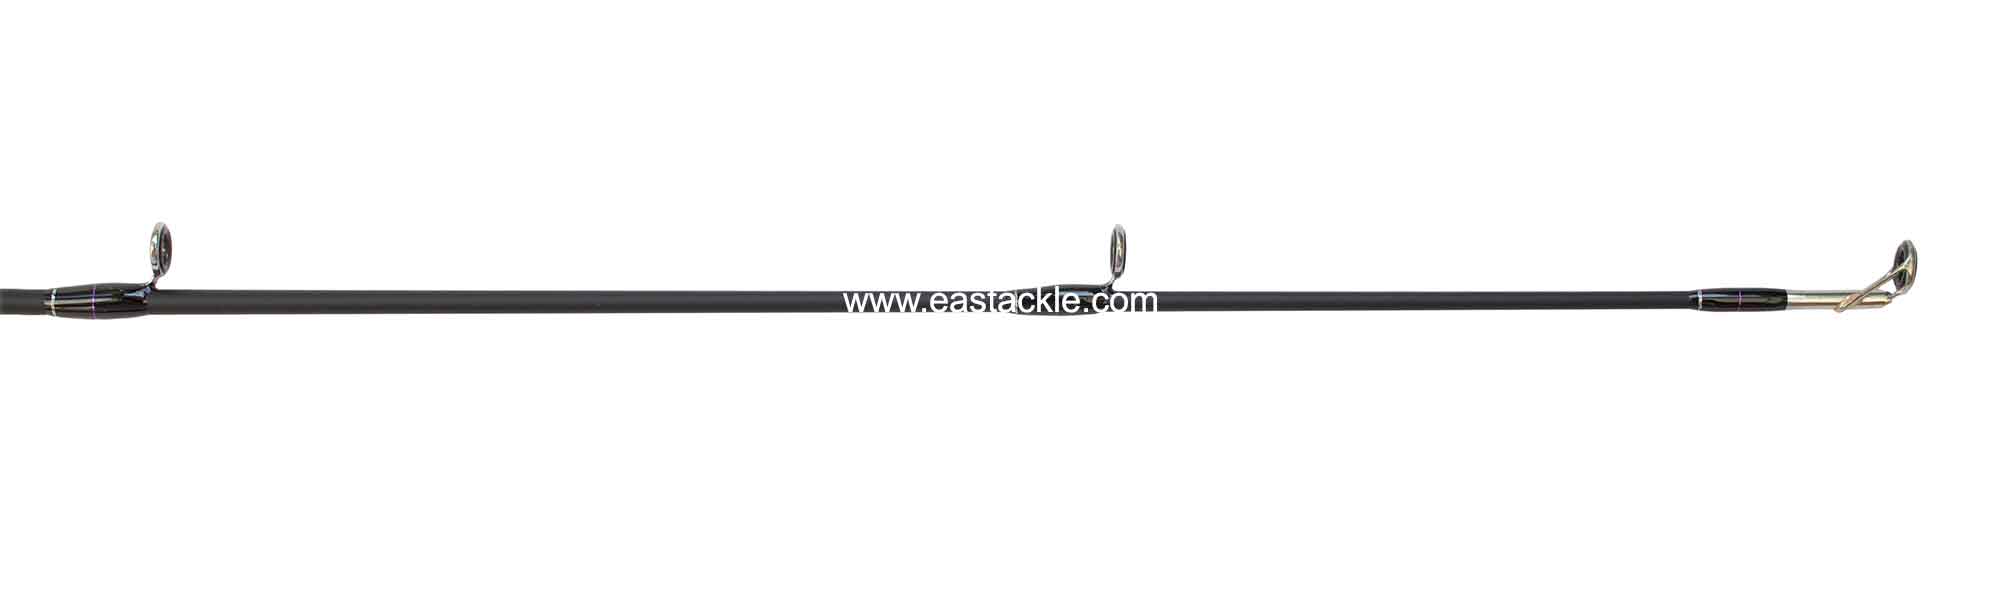 Megabass - Levante - F4.5-70C - FLAT SIDE SPECIAL - Bait Casting Rod - Tip Section